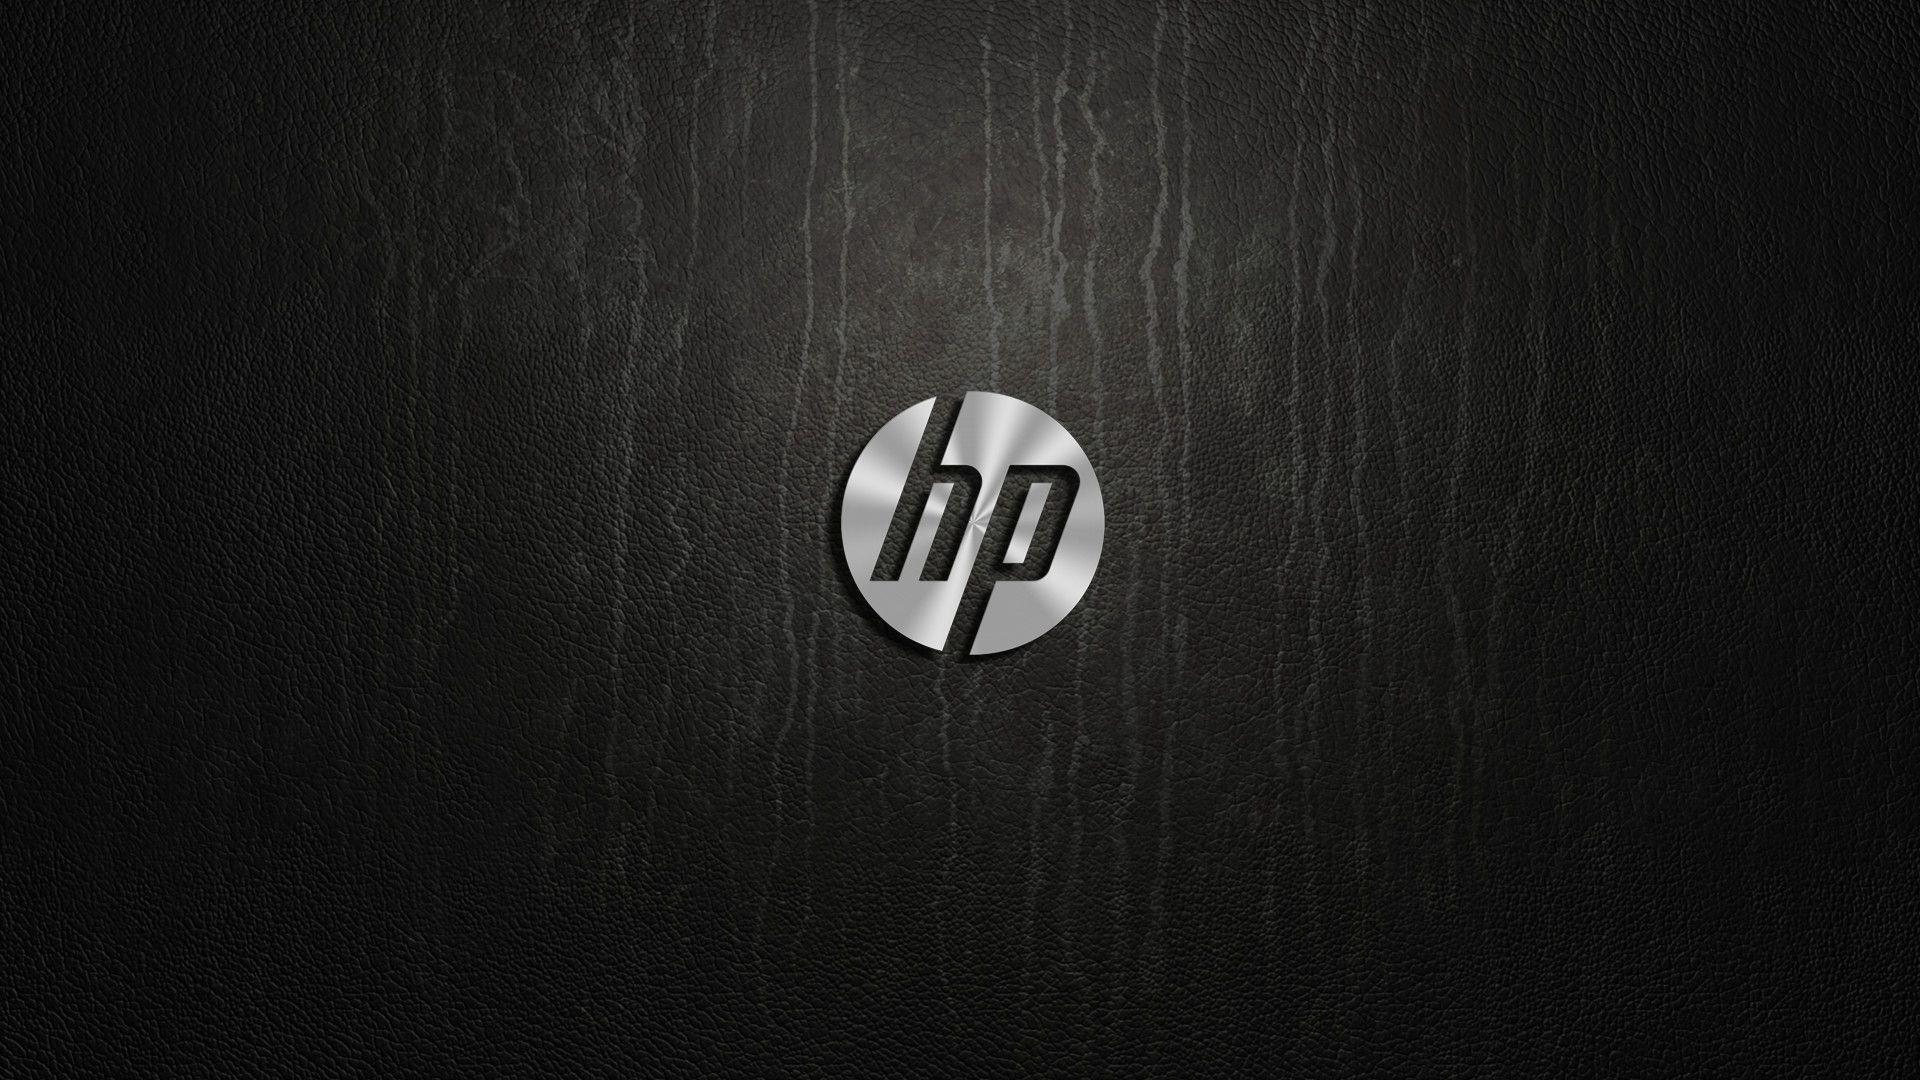 HP Spectre Wallpaper